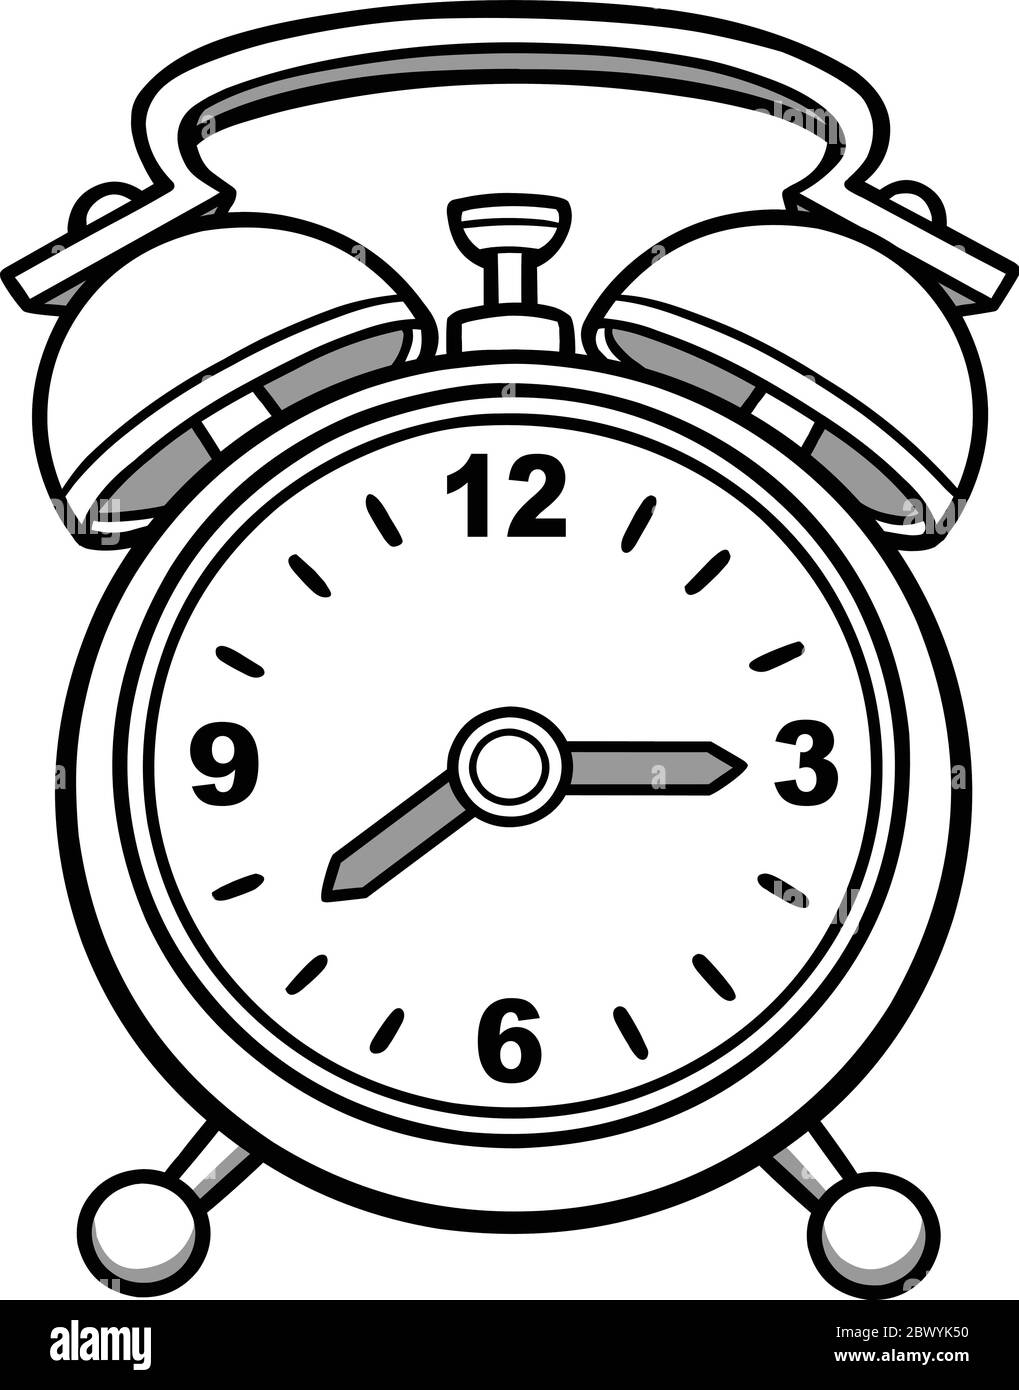 A cartoon alarm clock hi-res stock photography and images - Alamy